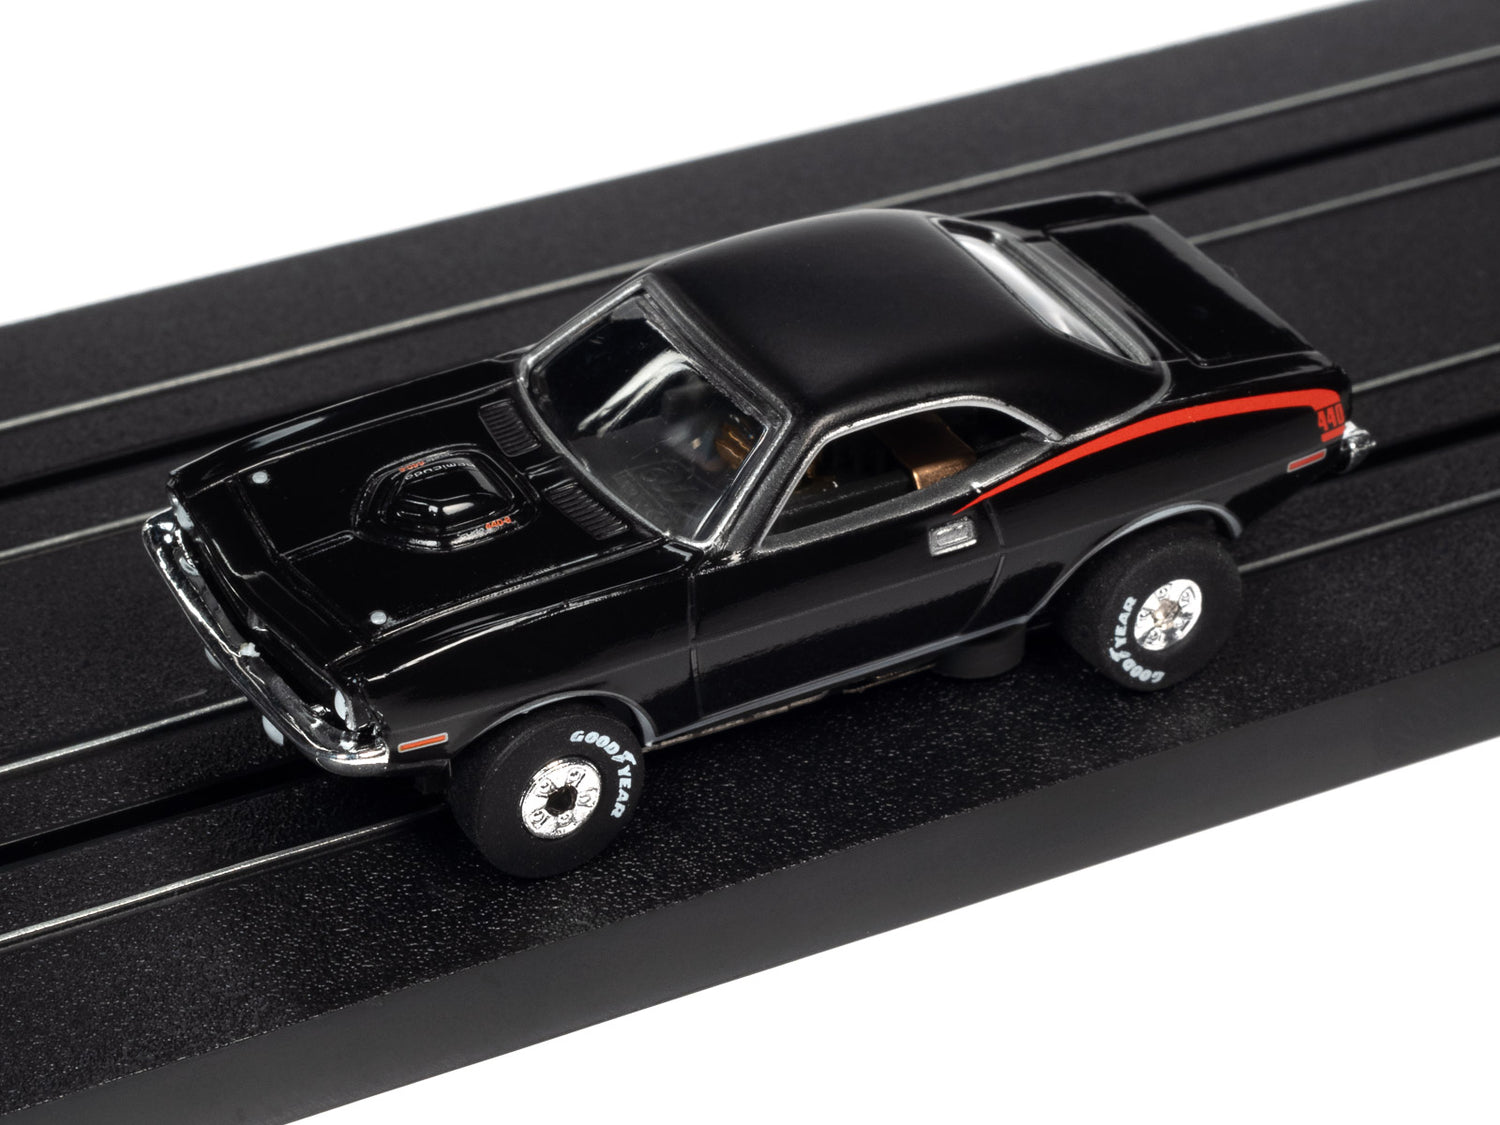 Auto World Thunderjet OK Used Cars 1970 Plymouth Cuda (Black) HO Scale Slot Car